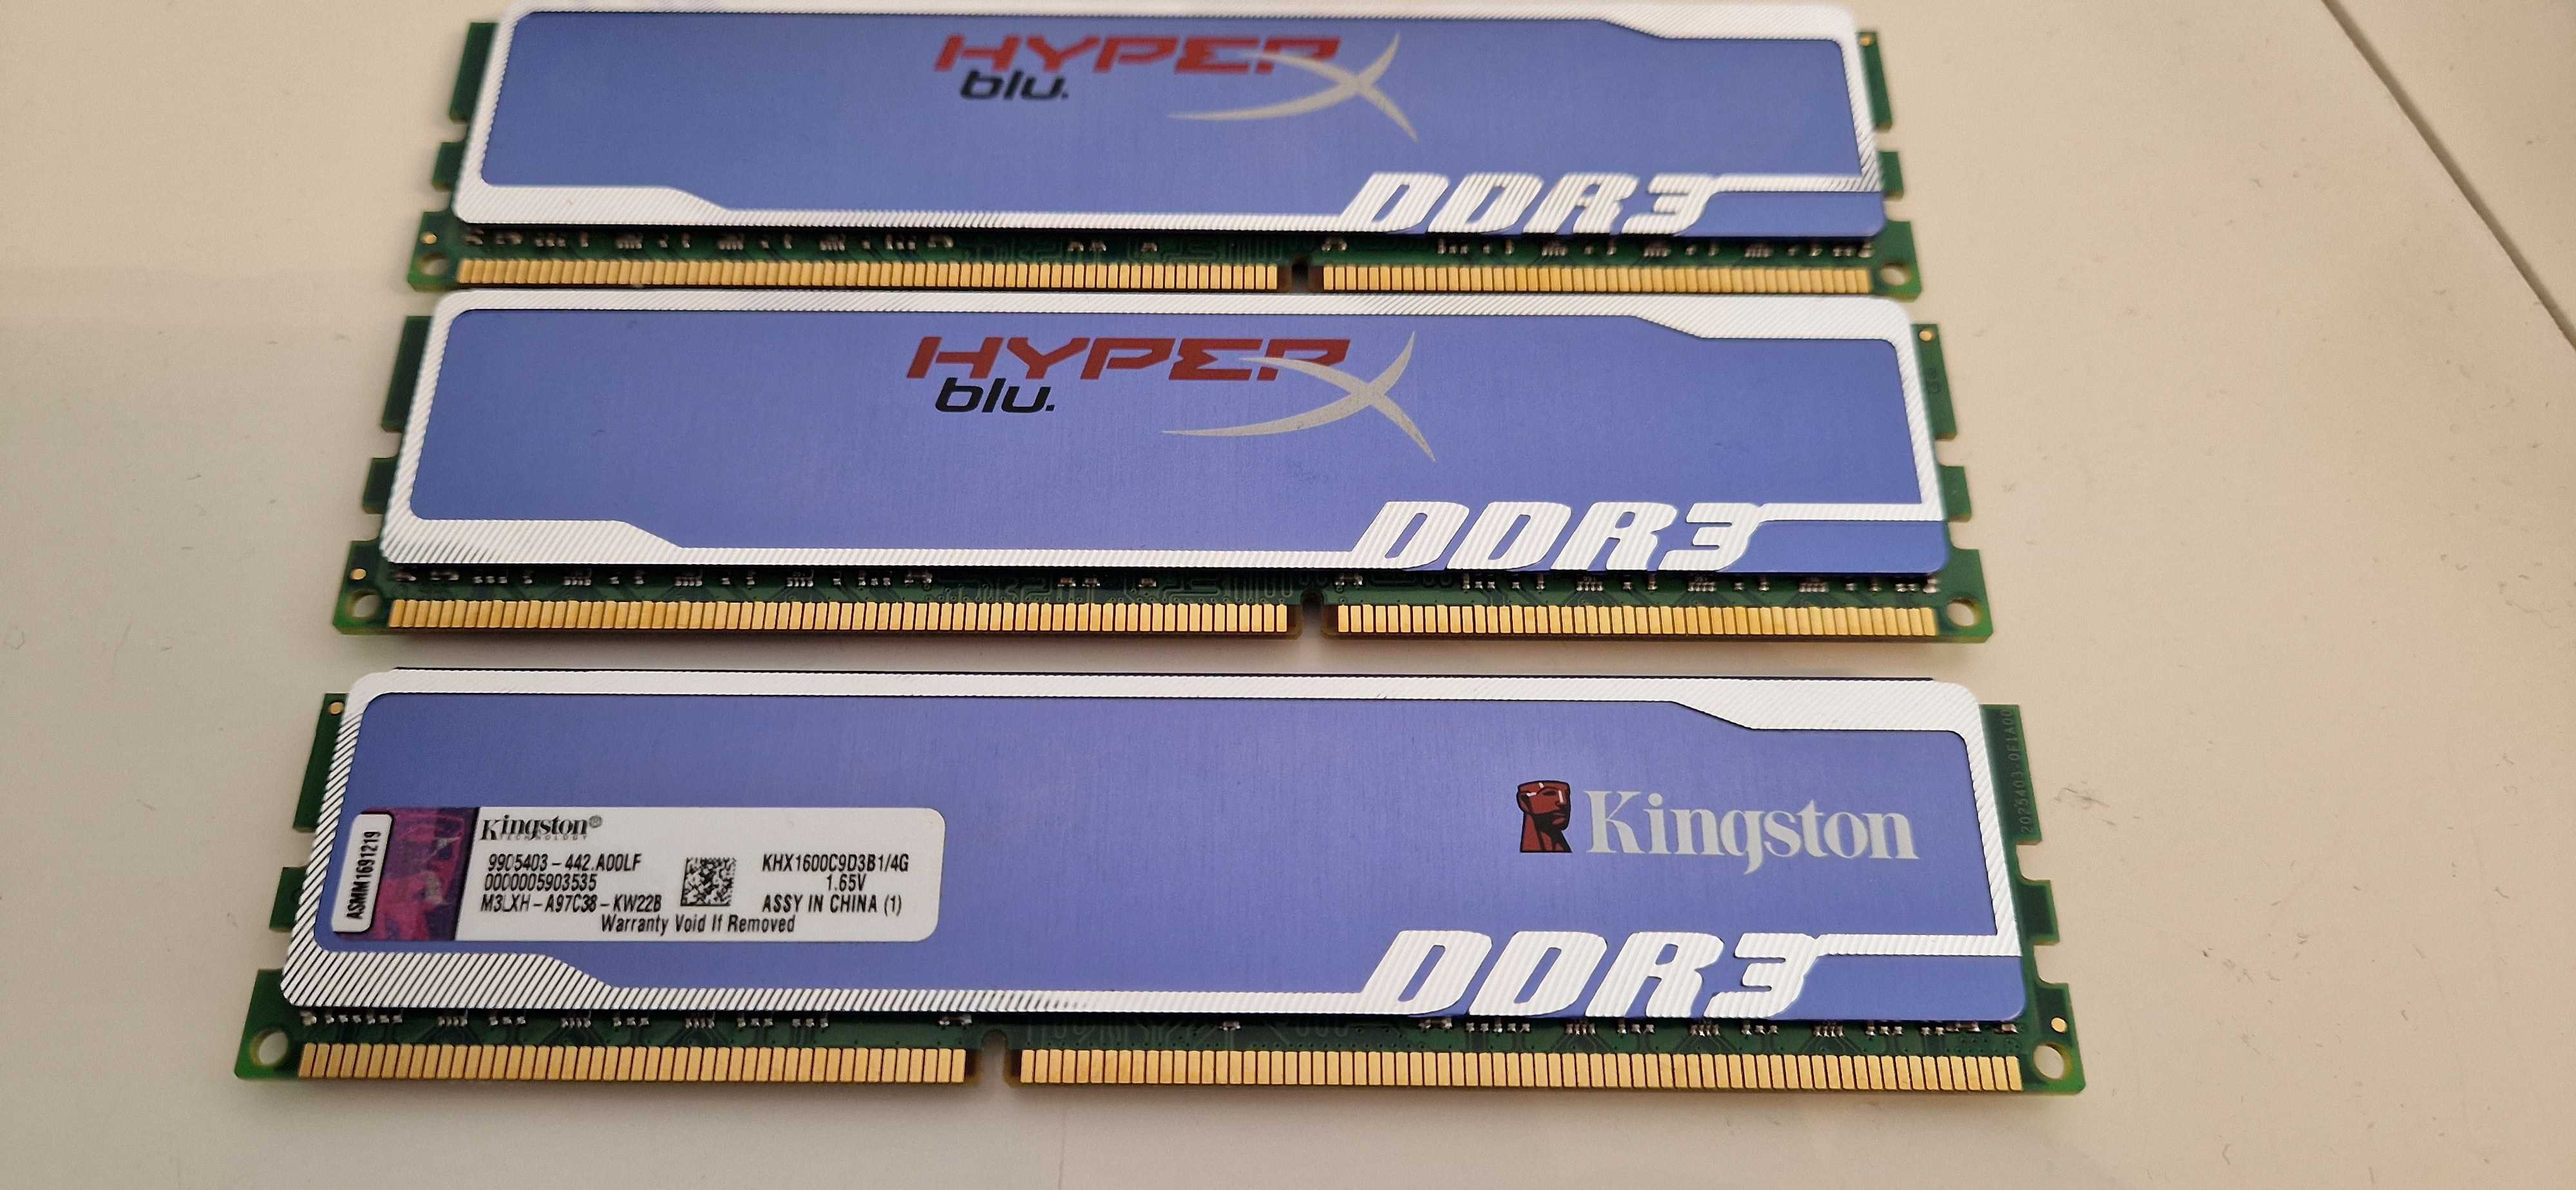 KingstonHyperX blu 12GB (3x4) DDR3 1600